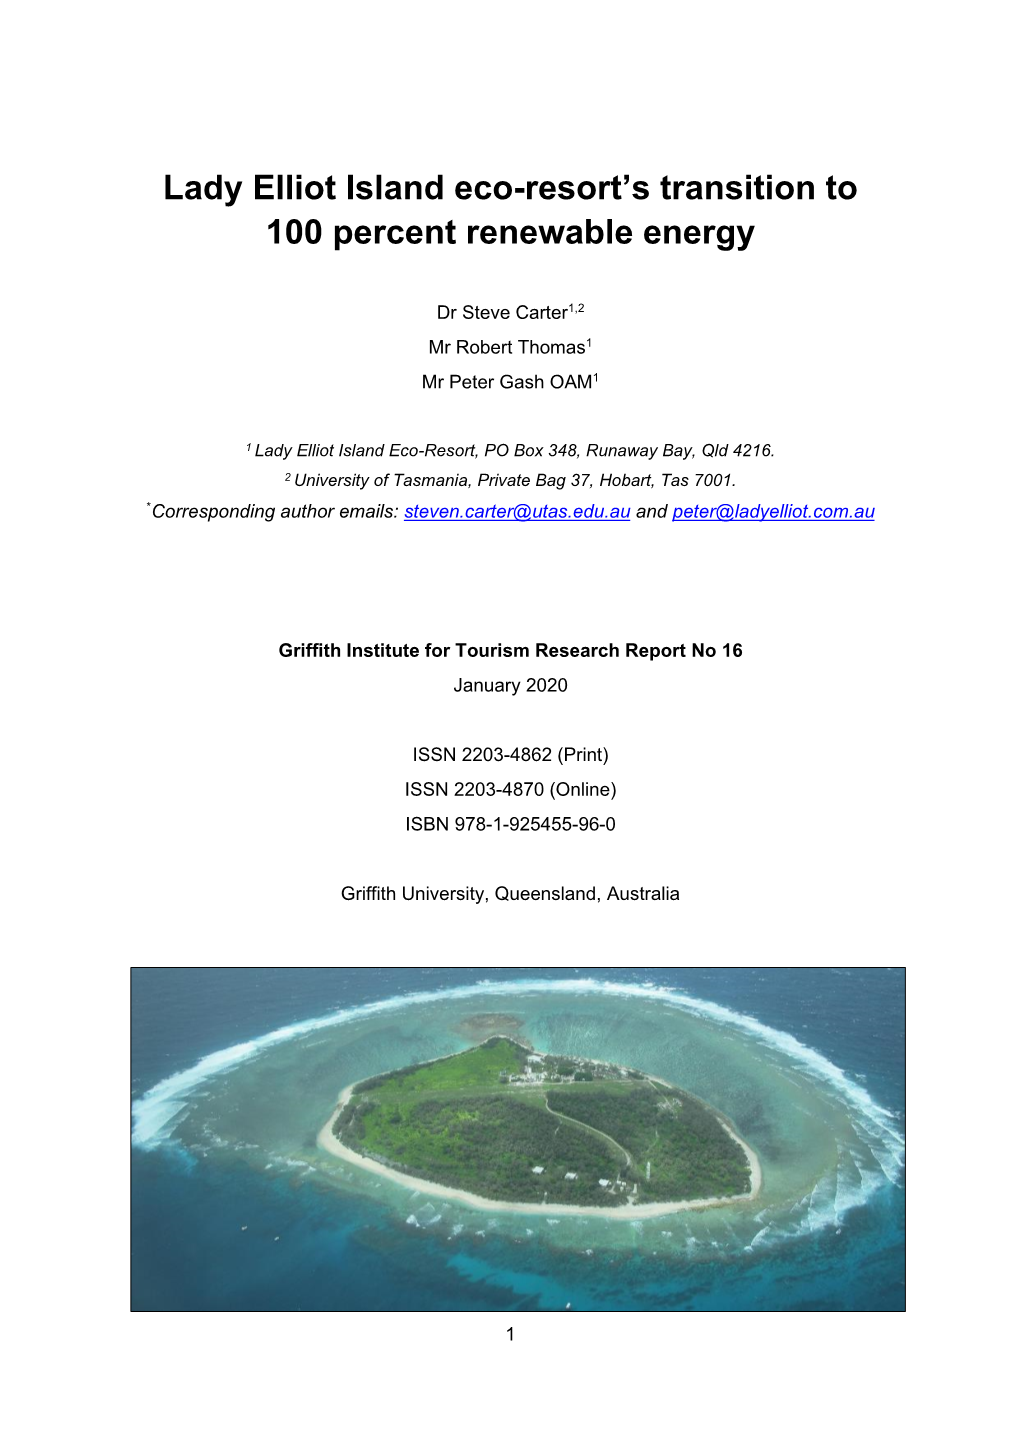 Lady Elliot Island Eco-Resort's Transition to 100 Percent Renewable